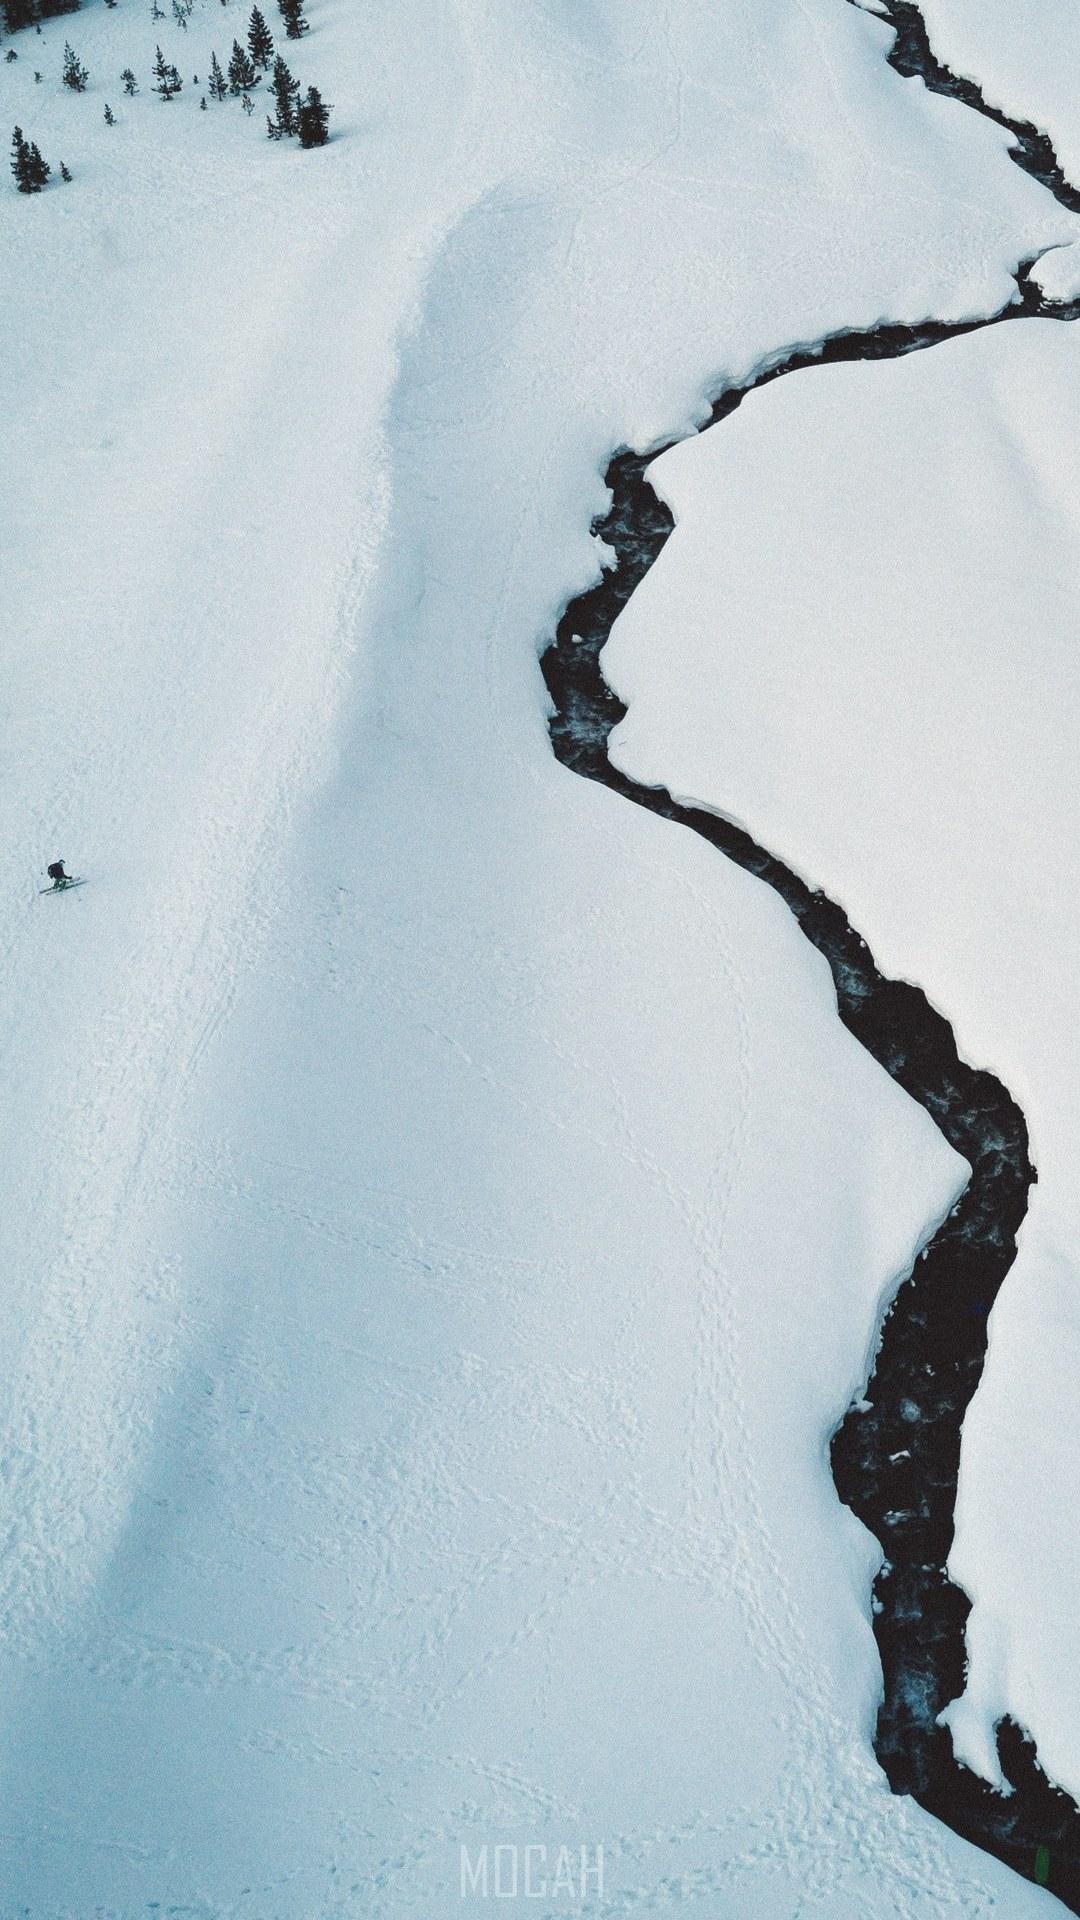 HD wallpaper, 1080X1920, Xiaomi Mi A1 Wallpaper Hd Download, Skier Skiing, A Drone Shot Of A Small River Flowing Through Snowy Plains